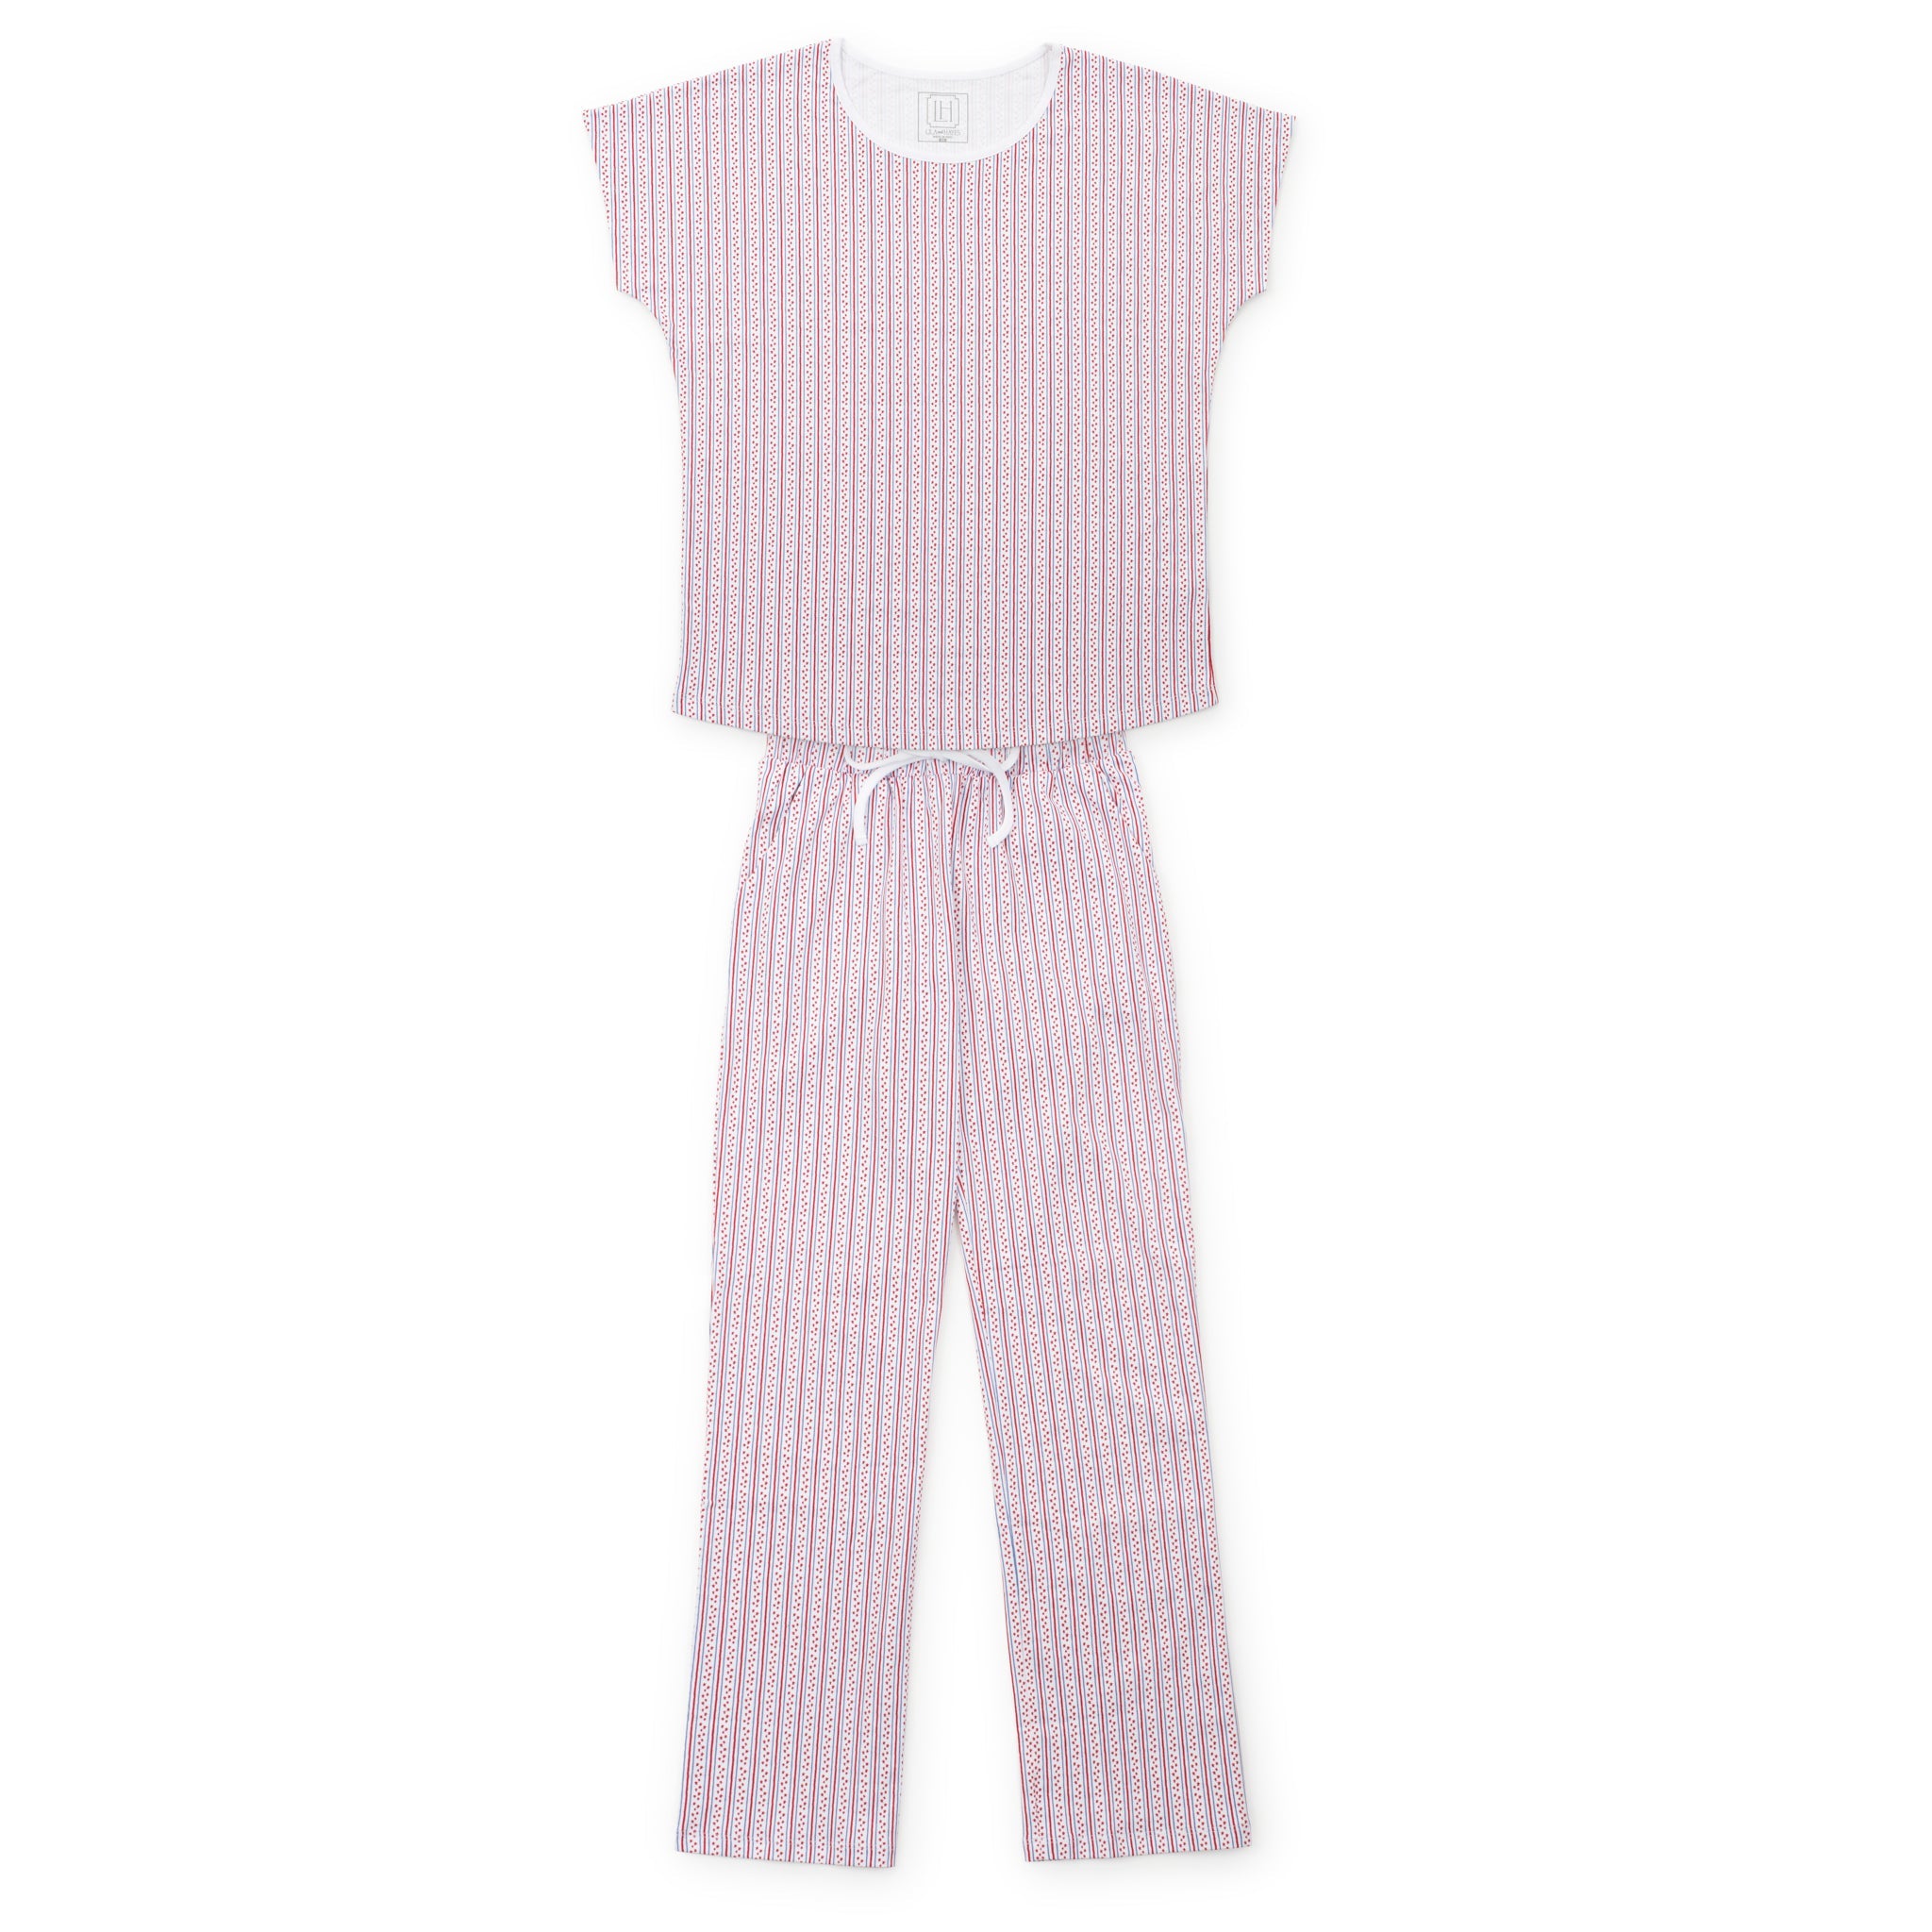 Marcia Women's Pima Cotton Pajama Pant Set - Stars and Stripes